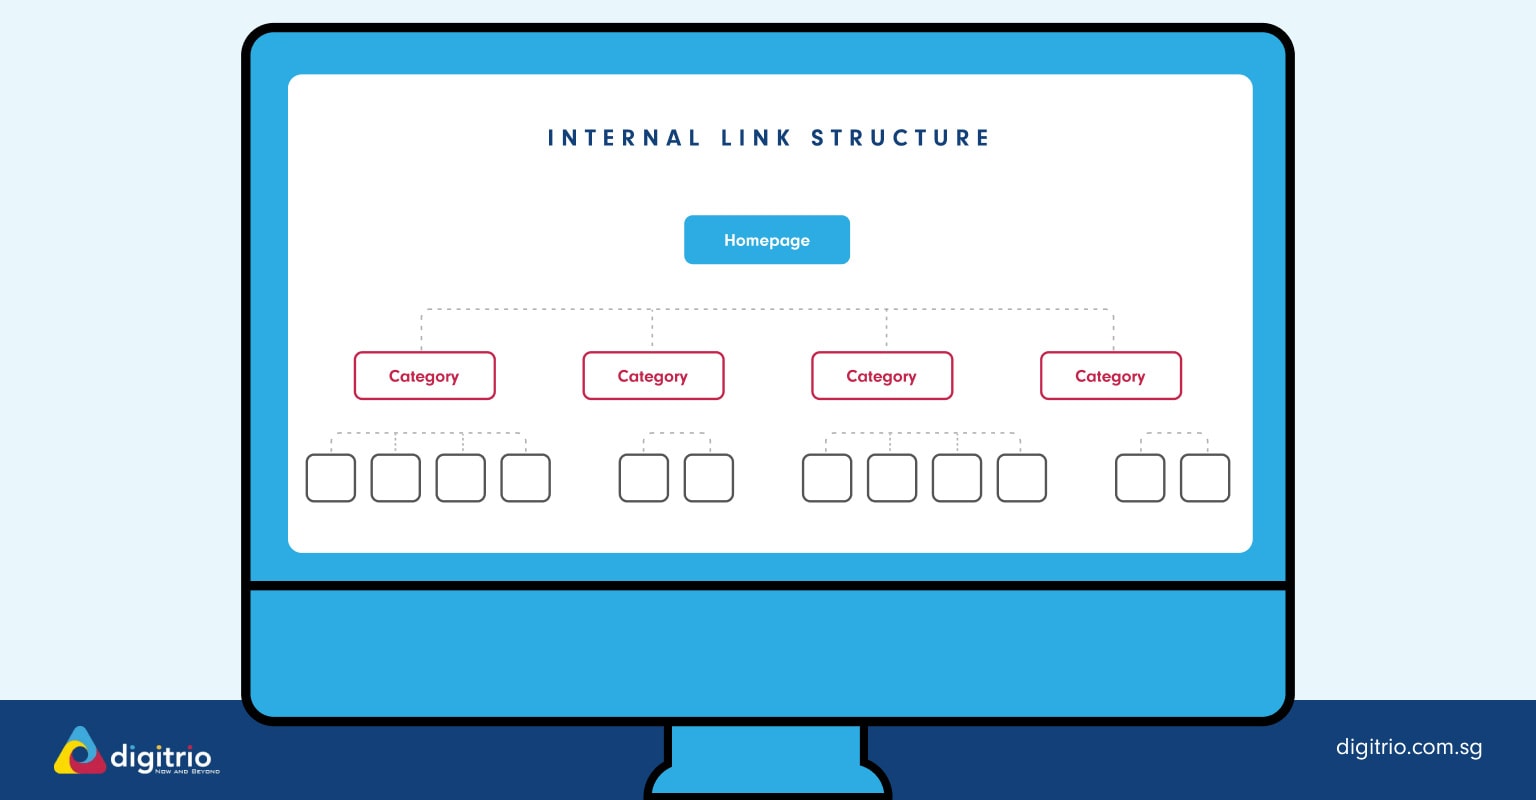 Internal Link Strategy flowchart by Digitrio